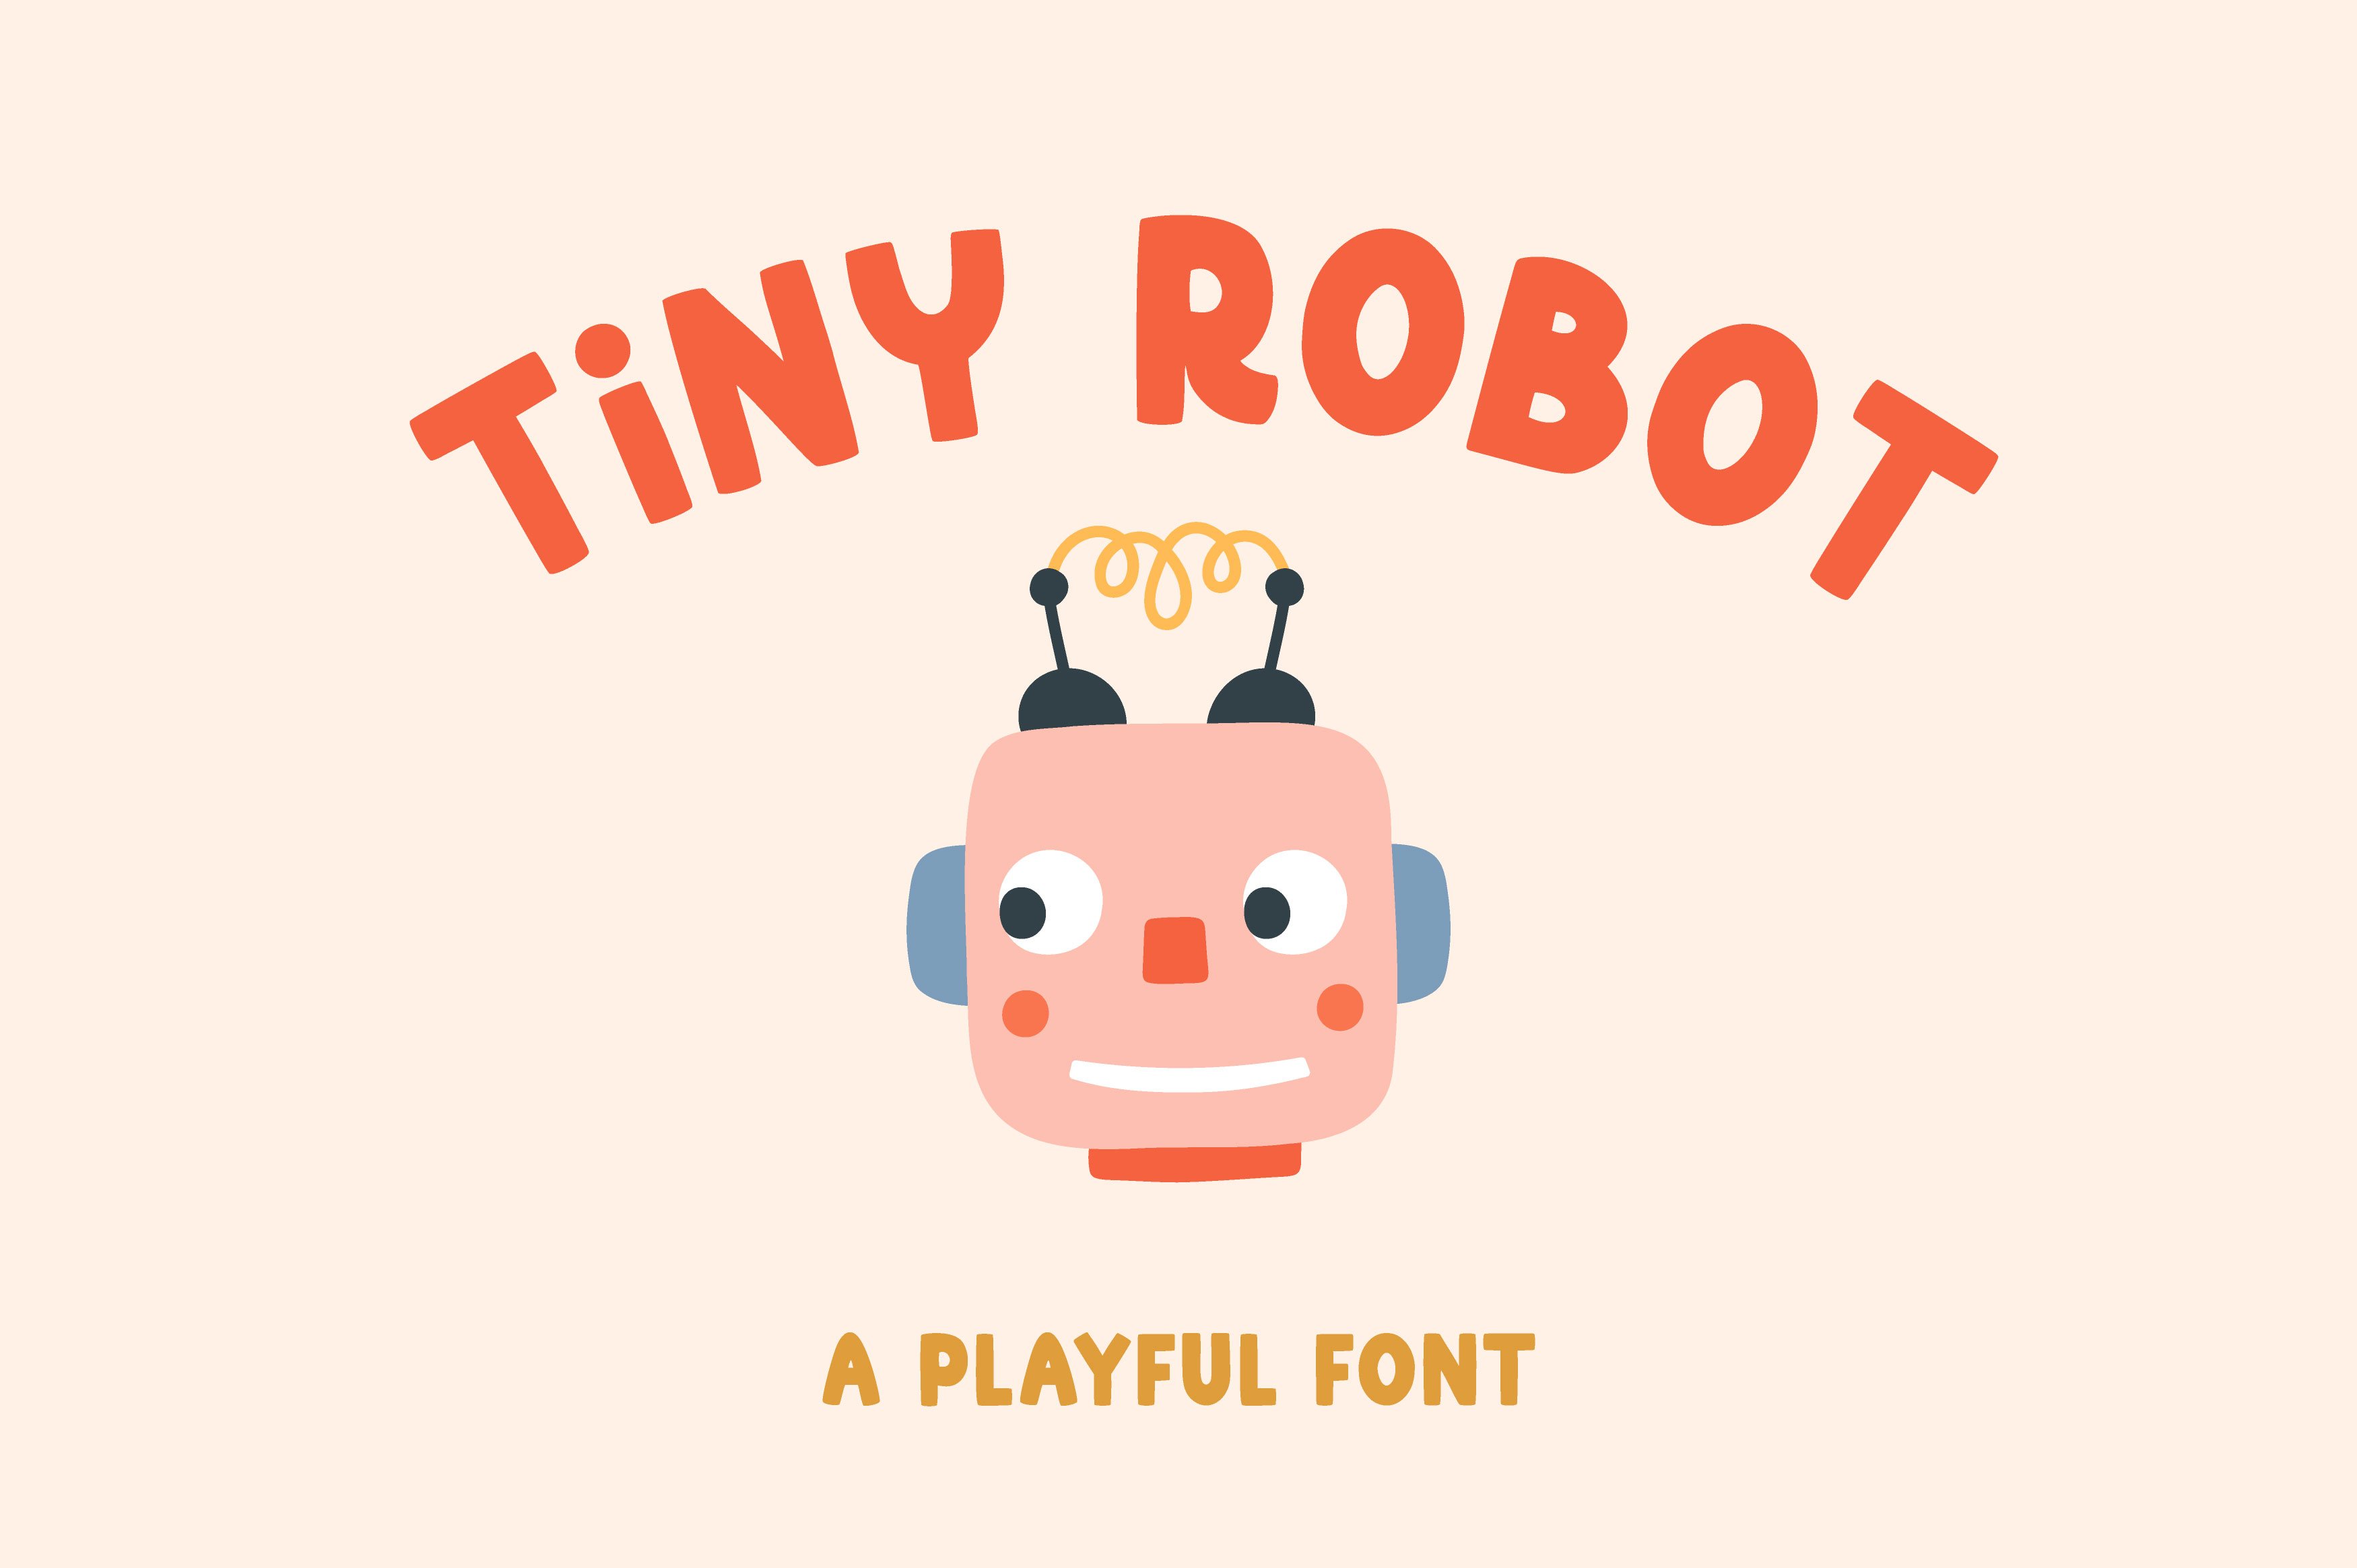 Tiny robot | Playful font cover image.